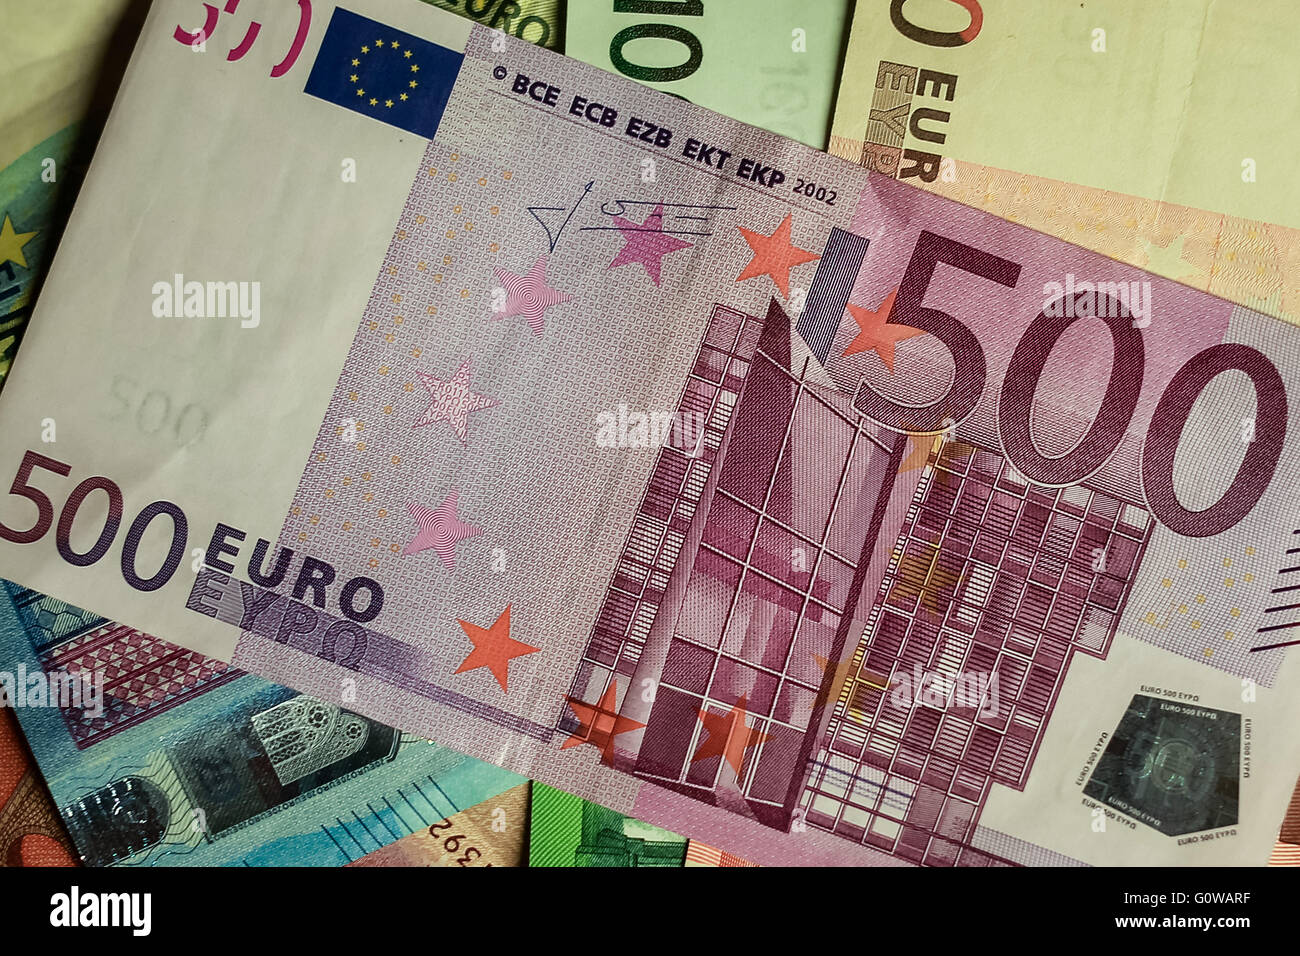 Крупная купюра евро. 500 Евро. Купюры евро. Банкнота 500 евро. Евро купюра 500 евро.